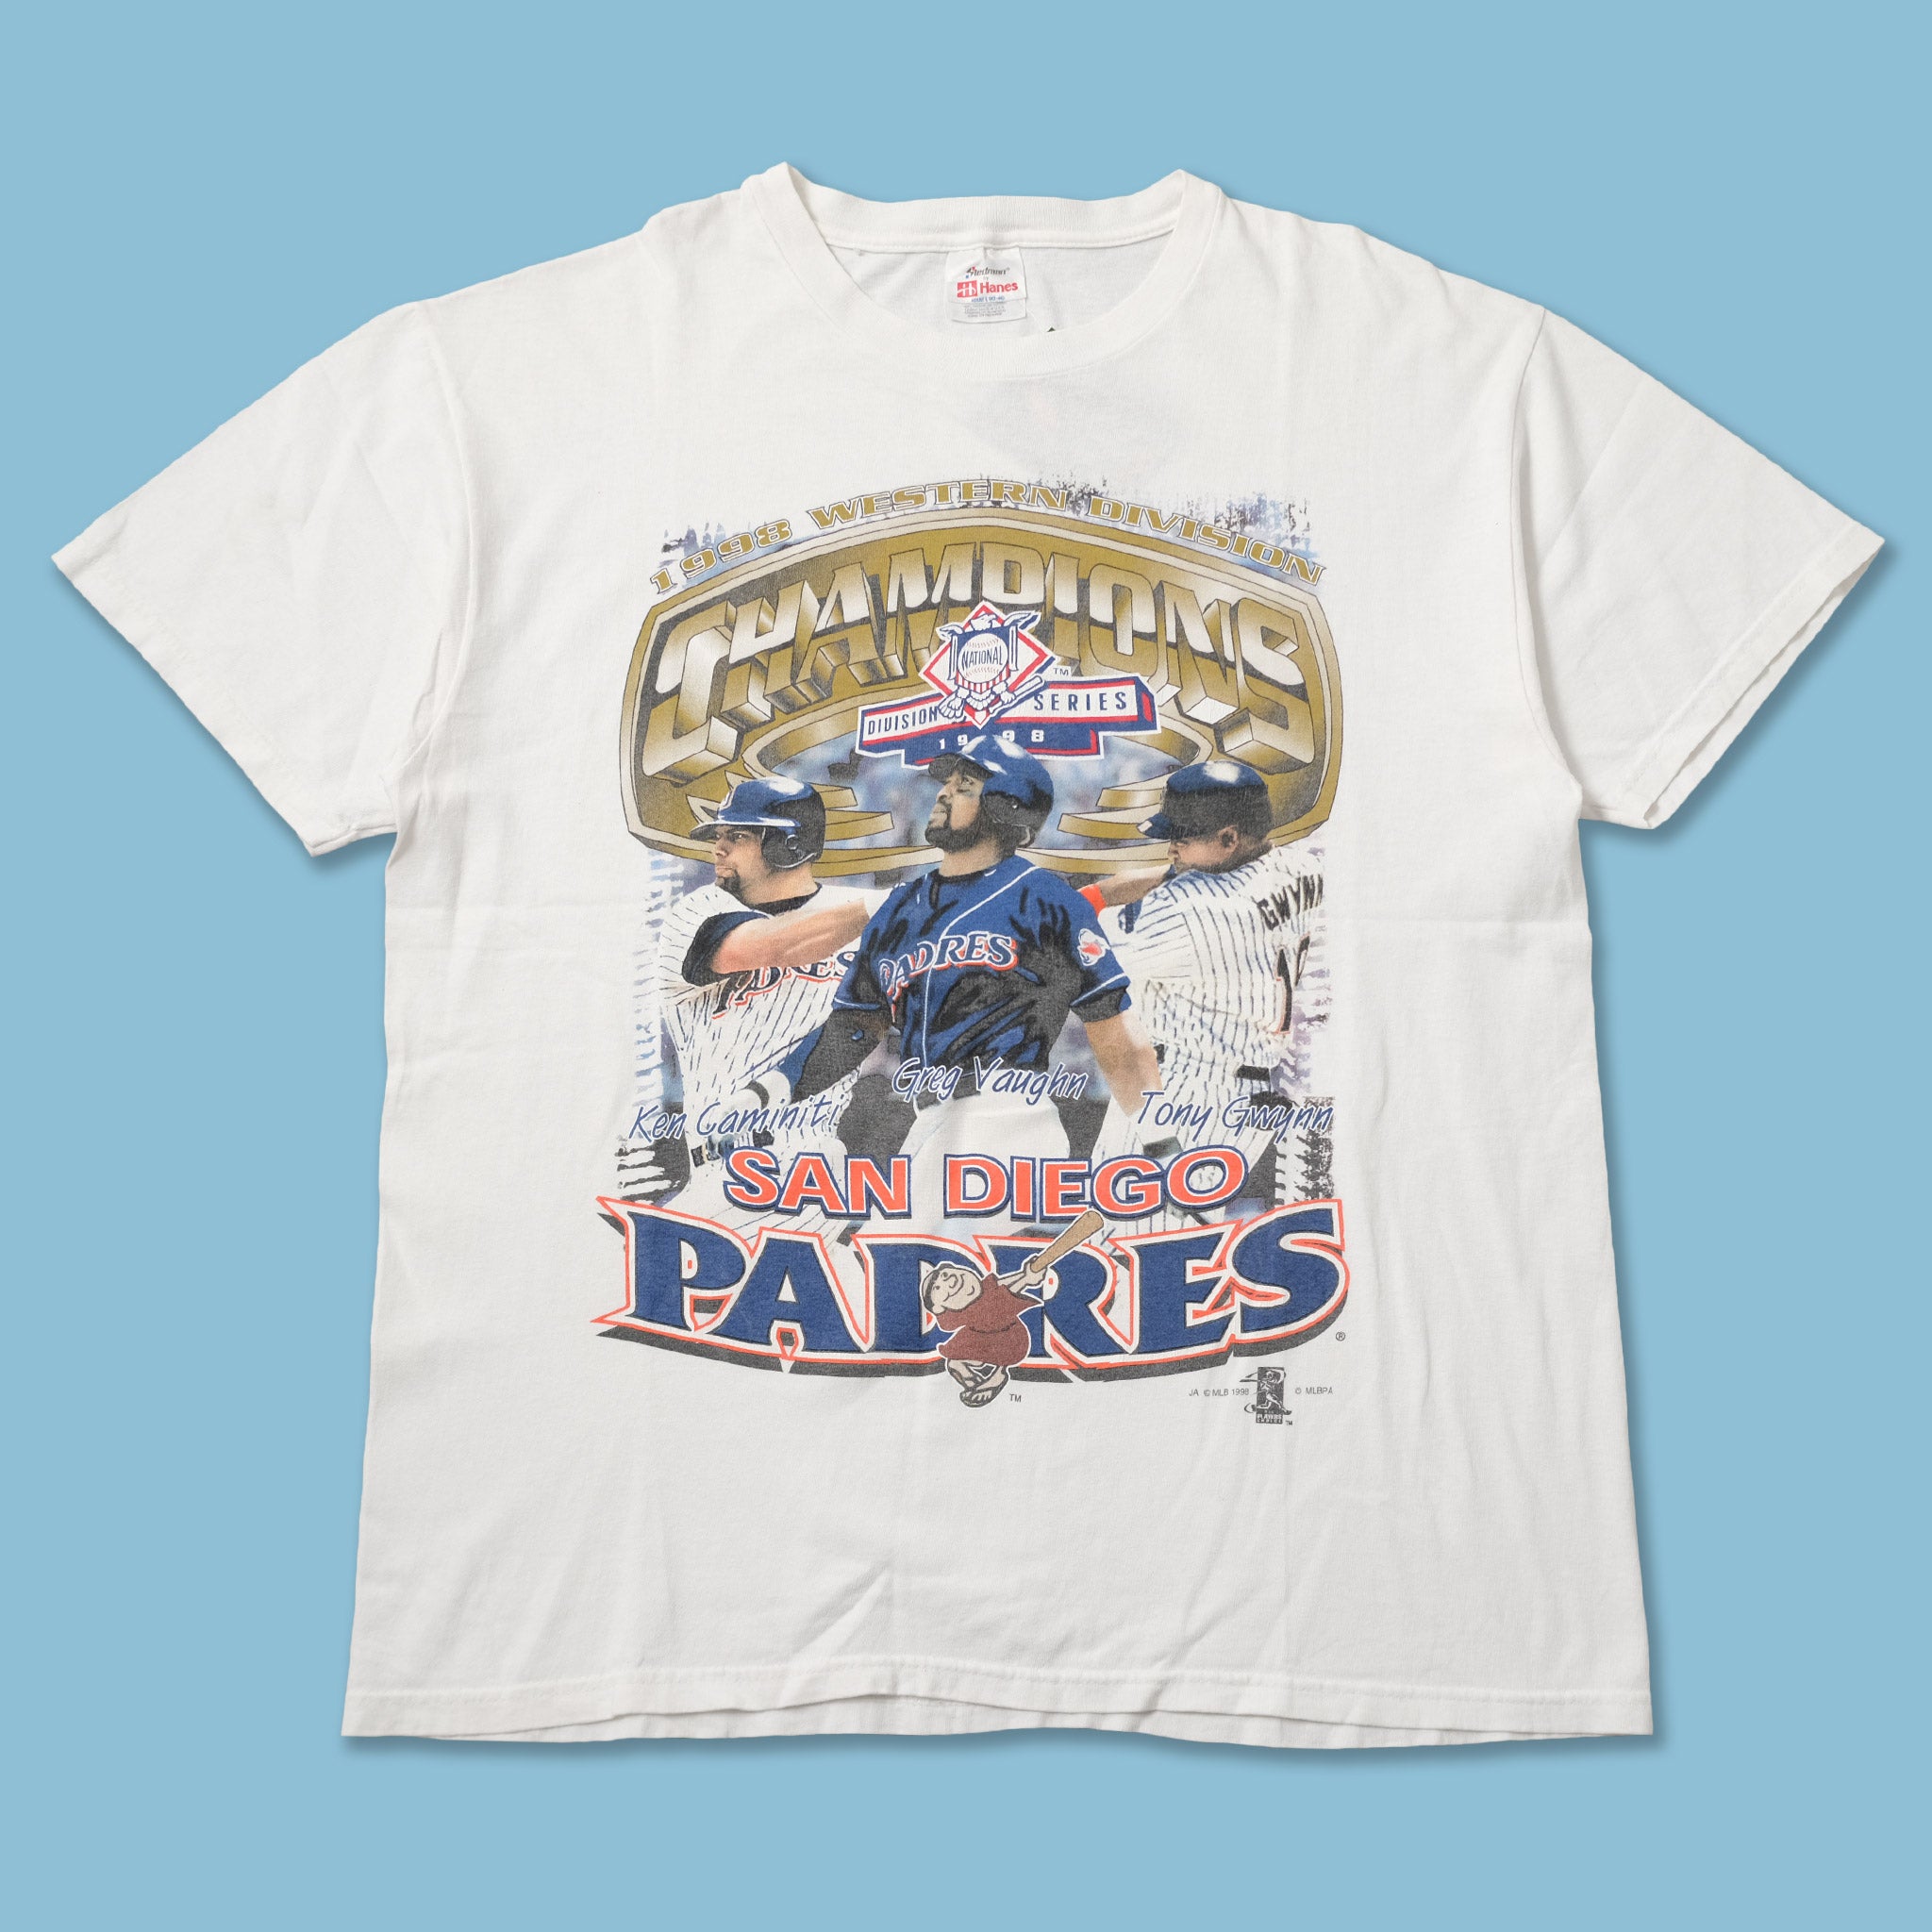 Vintage San Diego Padres Shirt, San Diego EST 1969 Shirt Men Women KV11667